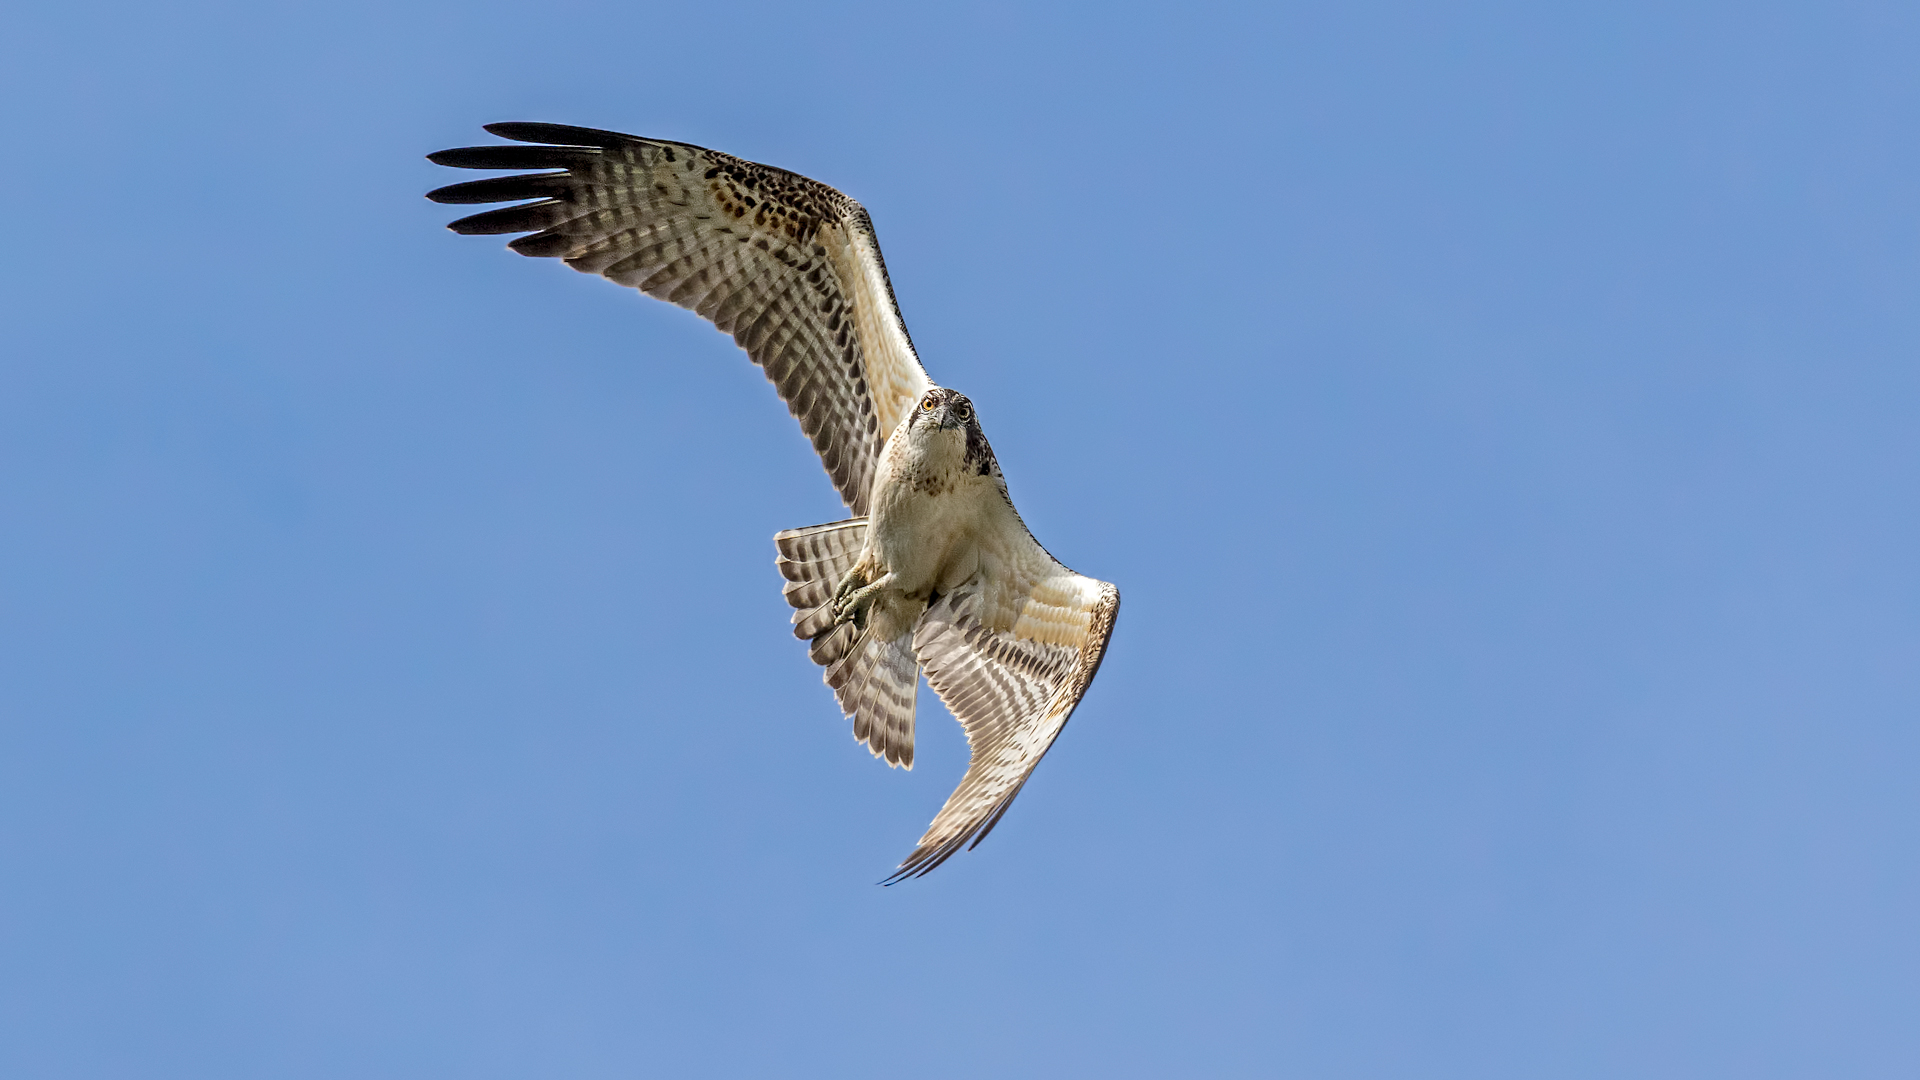 Osprey in flight at Weston Turville